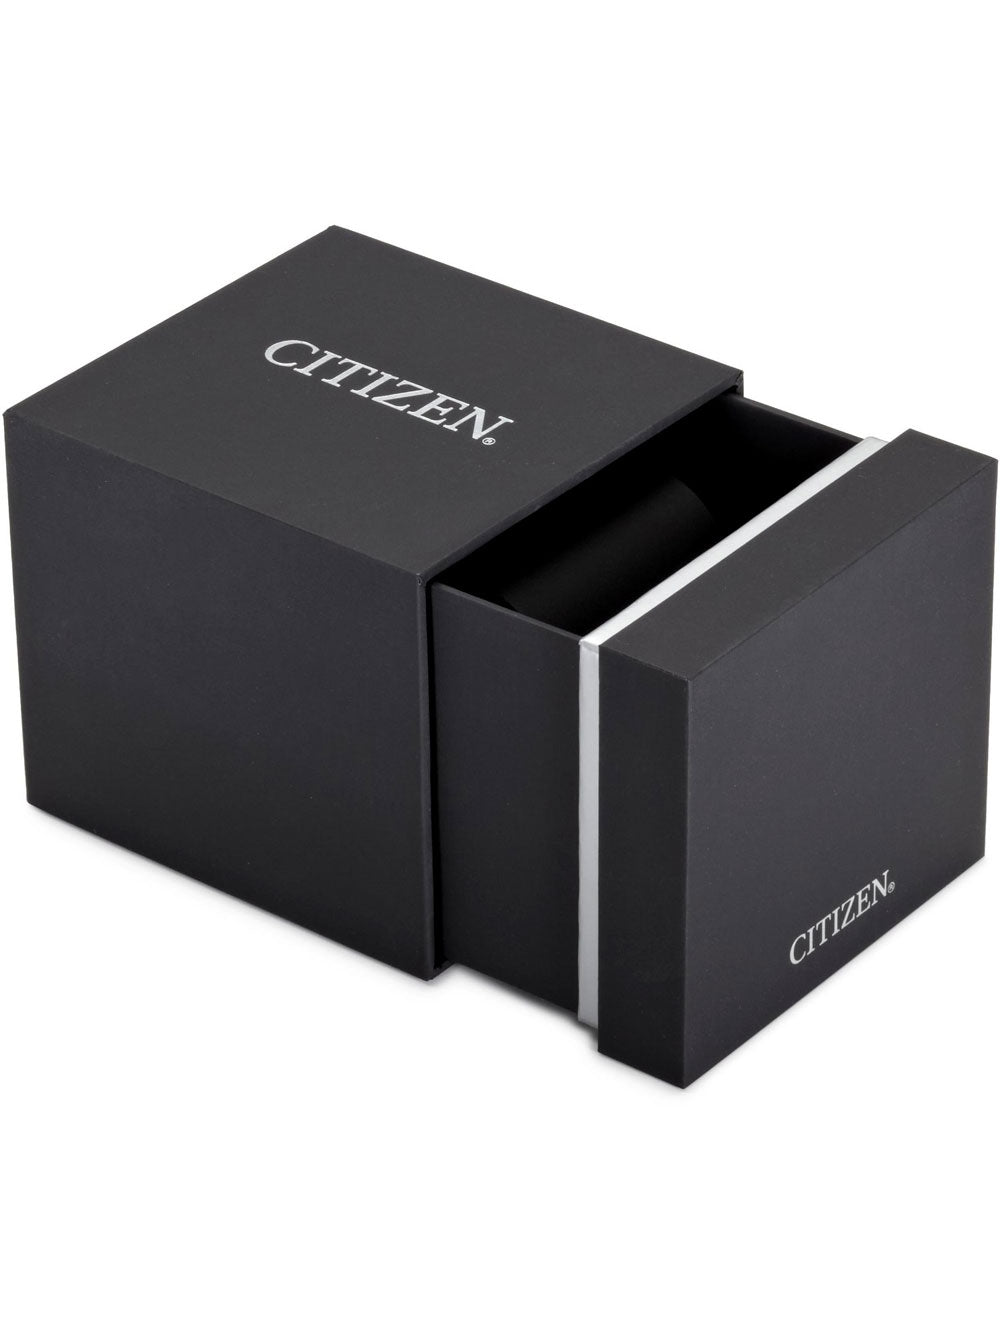 Citizen Eco-Drive Watch EW2446-81A 31mm 5ATM